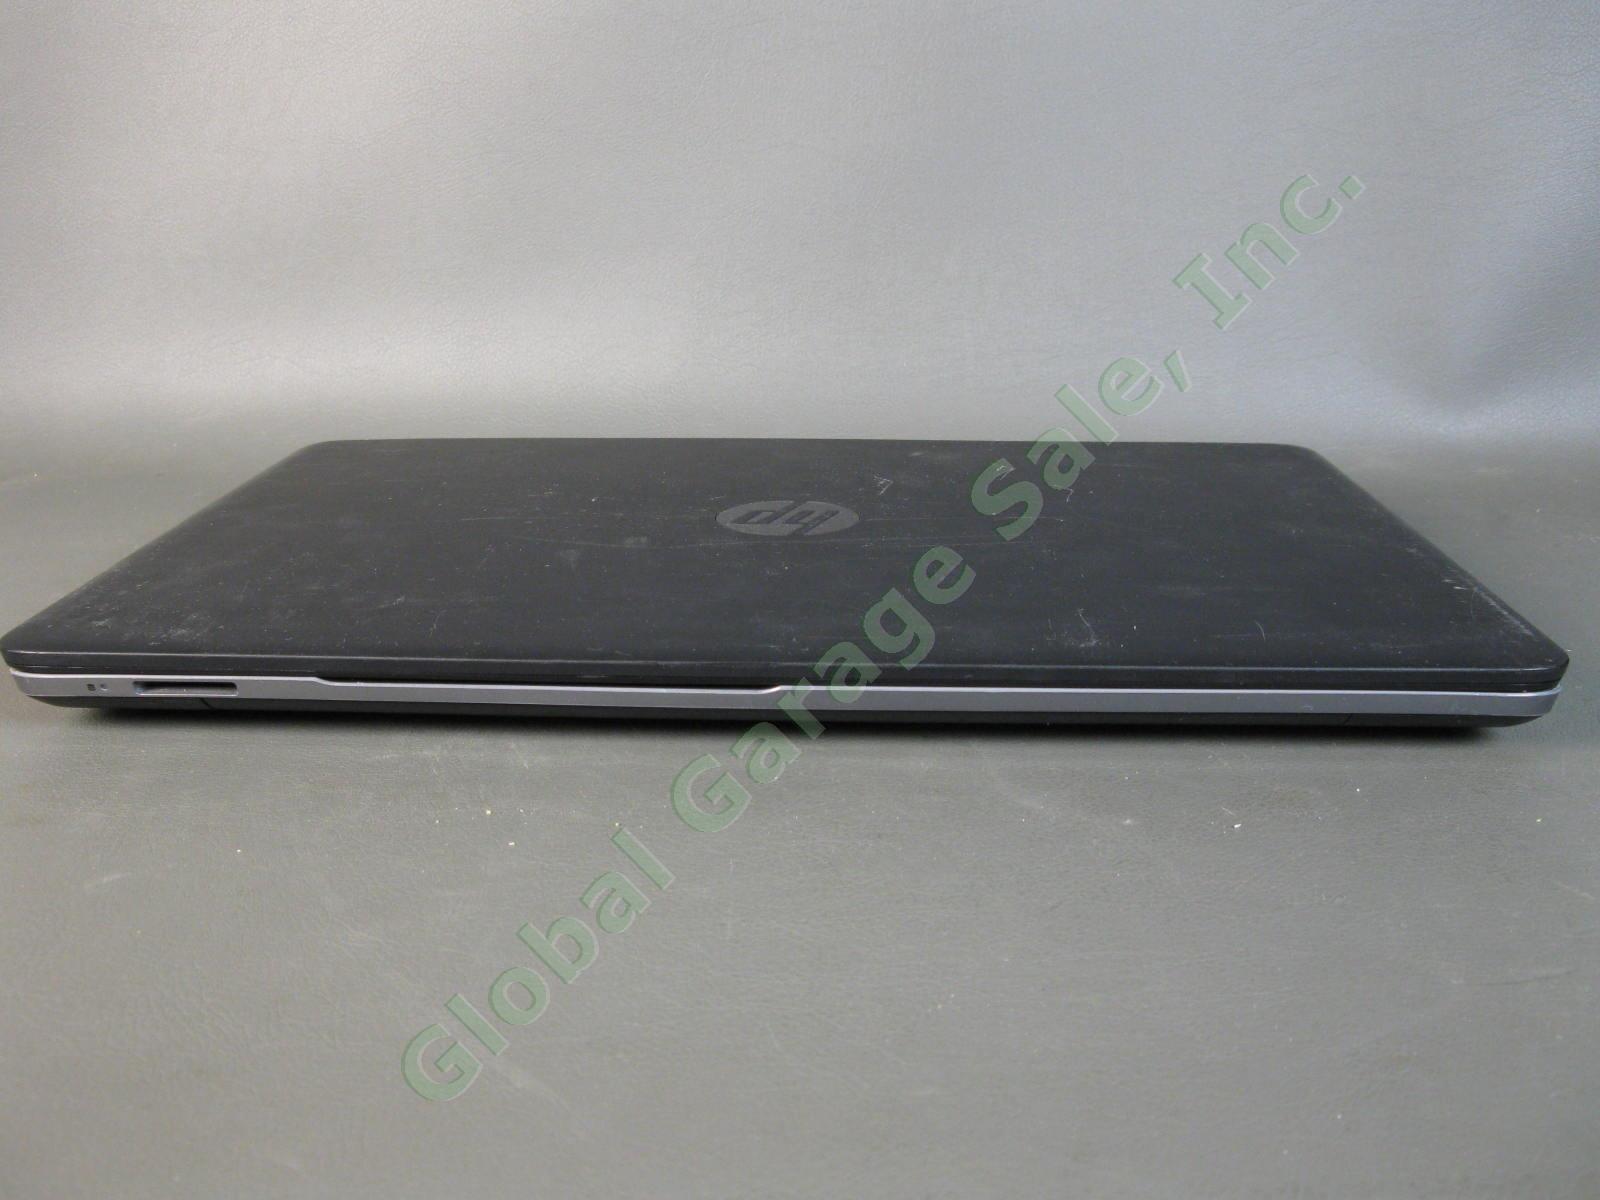 HP ProBook 450 G1 Laptop Computer i5-4200M 4GB 500GB Windows 10 WIFI Webcam READ 3